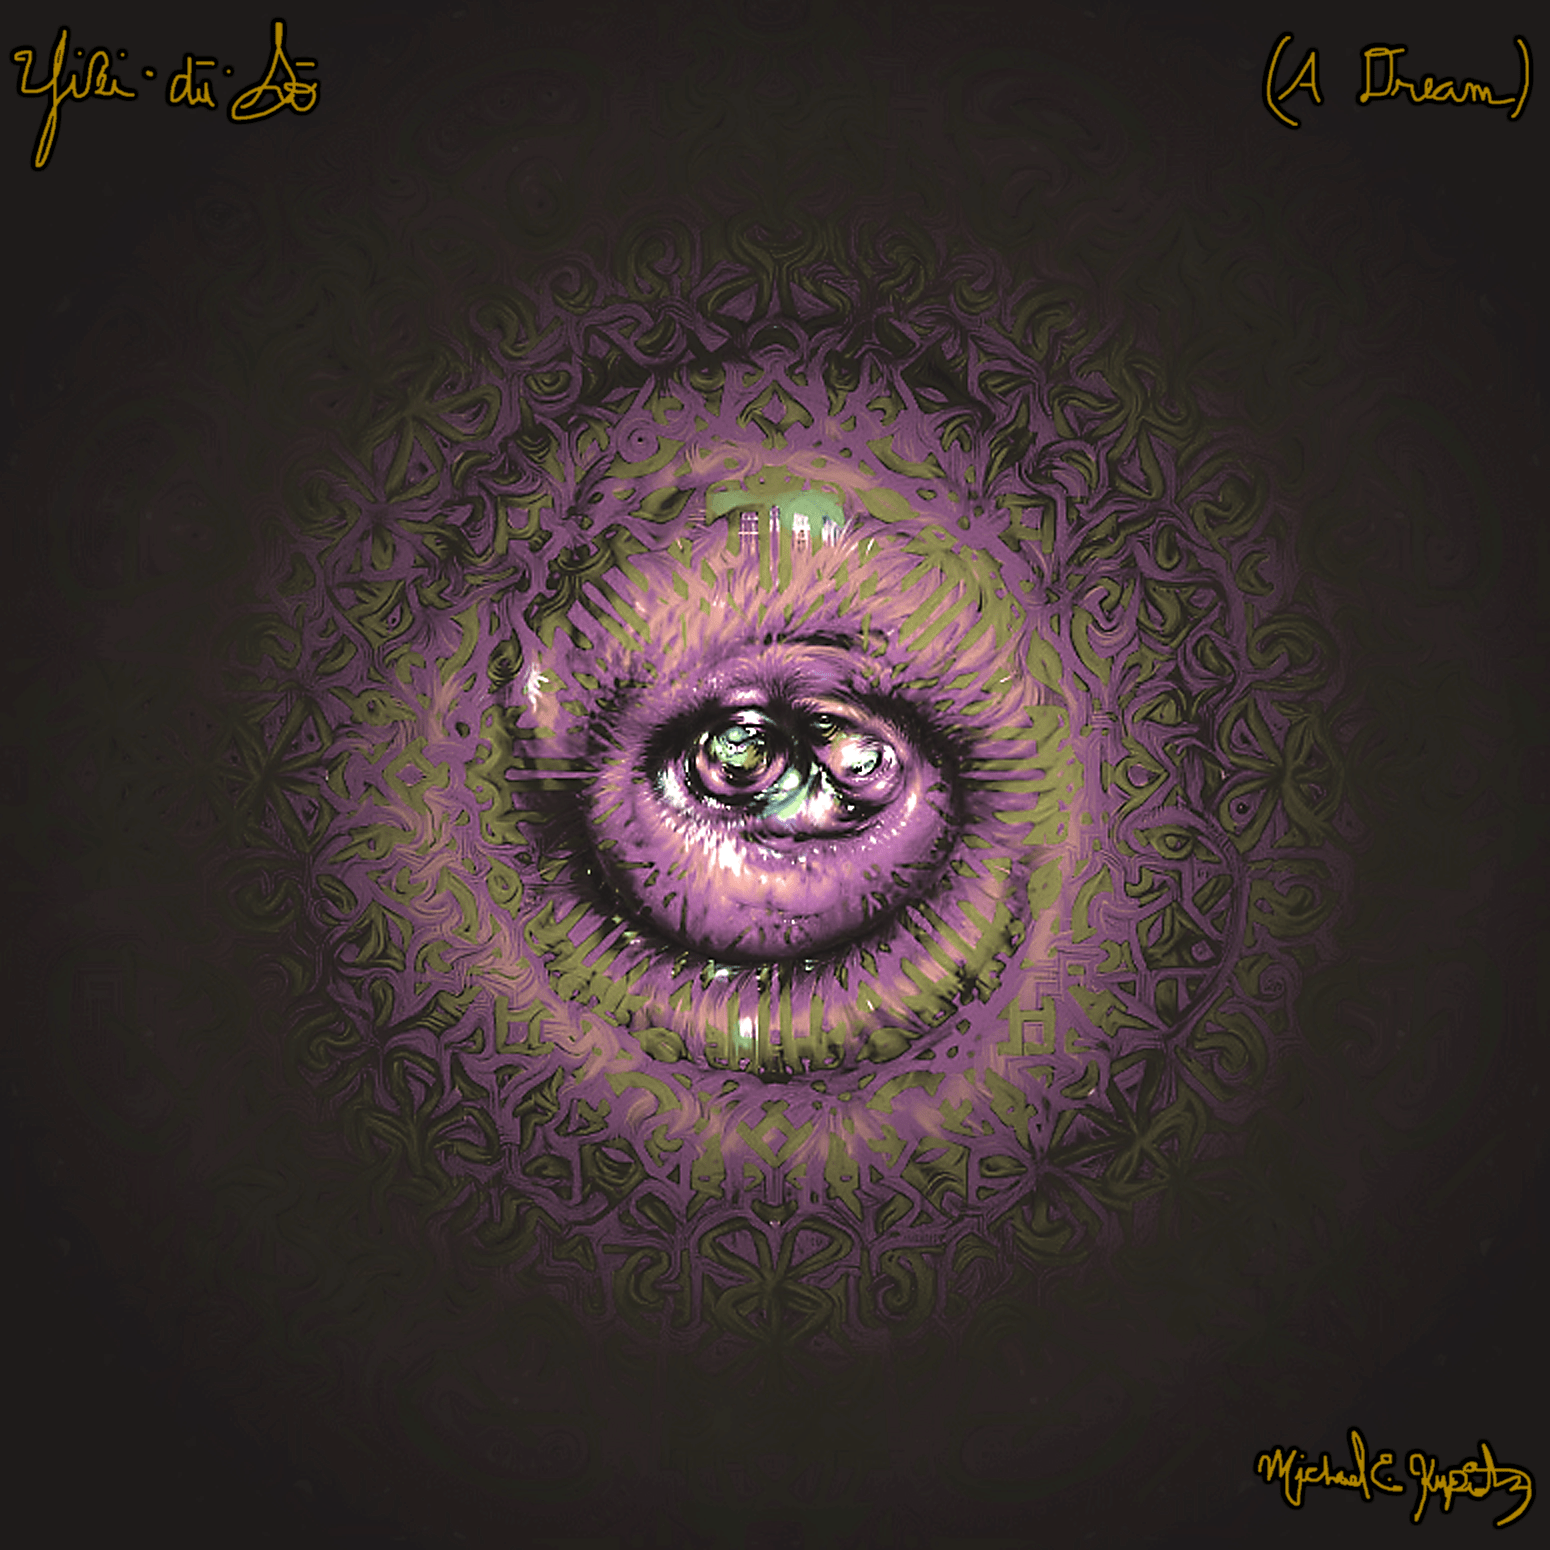 Michael Kupietz Yiki·du·so A Dream digital single 02 Yiki·du·so cannibal hypnotica mix 1 wav image